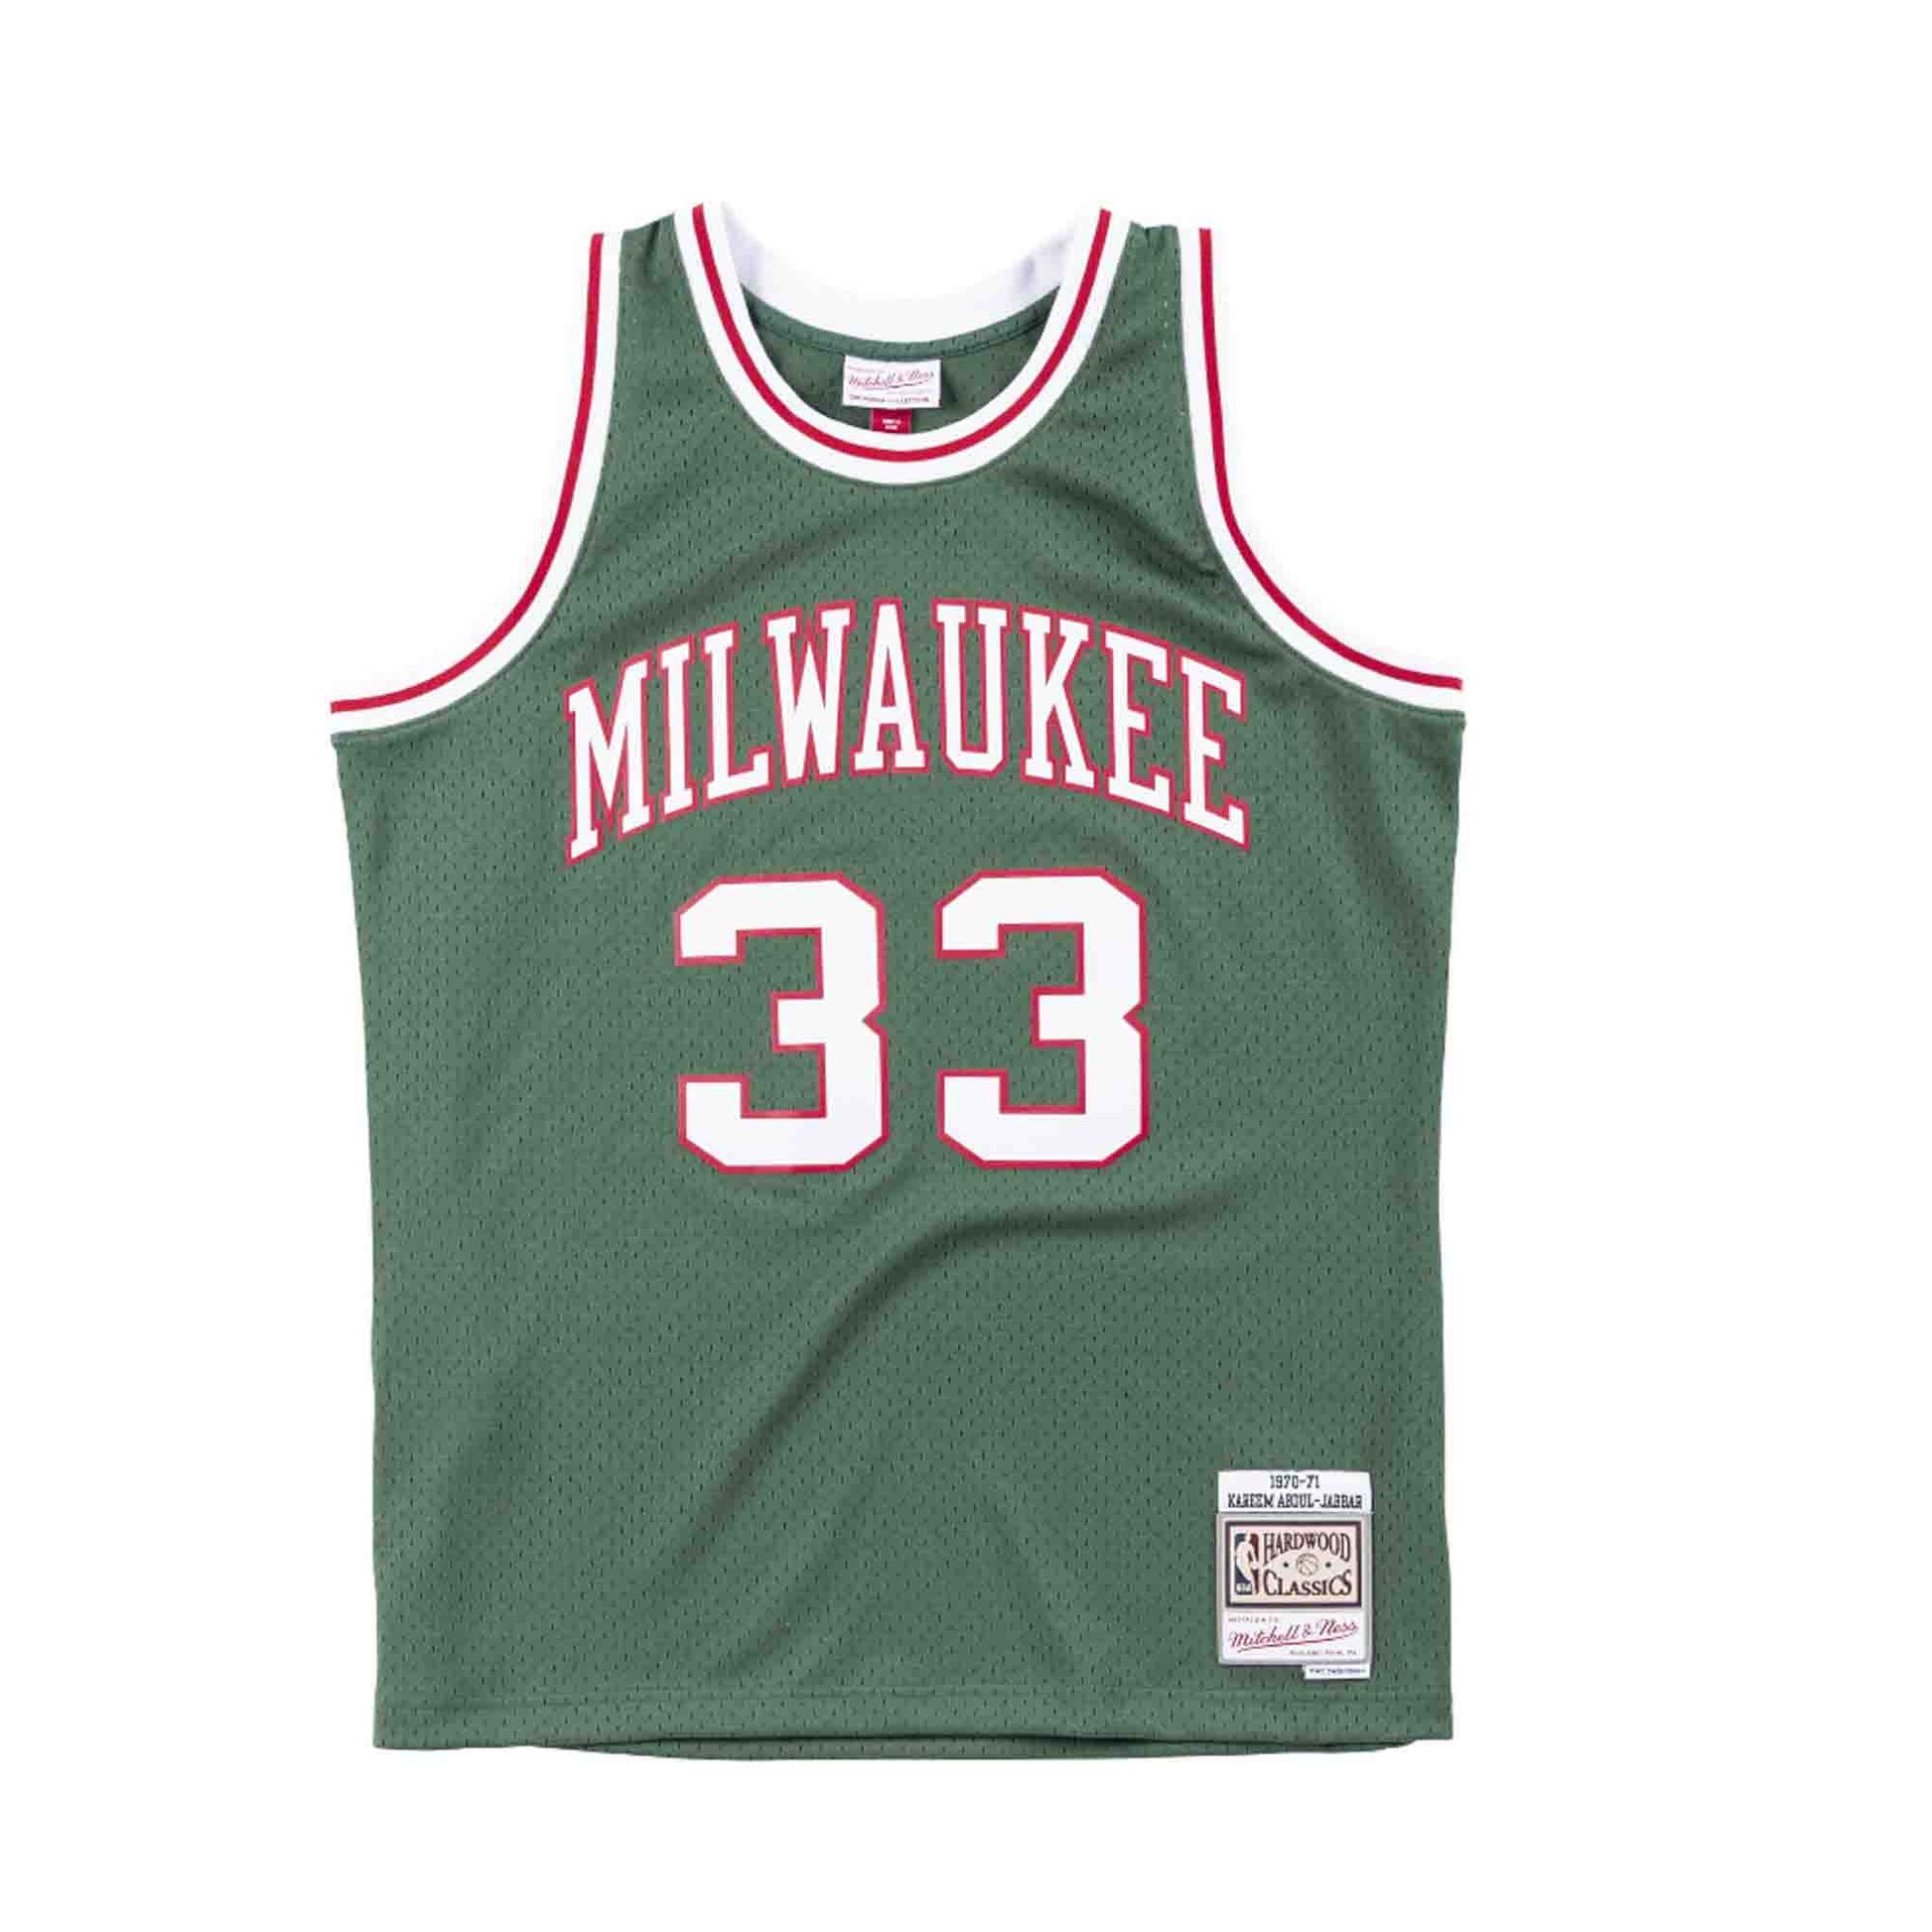 Cheap Milwaukee Bucks Apparel, Discount Bucks Gear, NBA Bucks Merchandise  On Sale